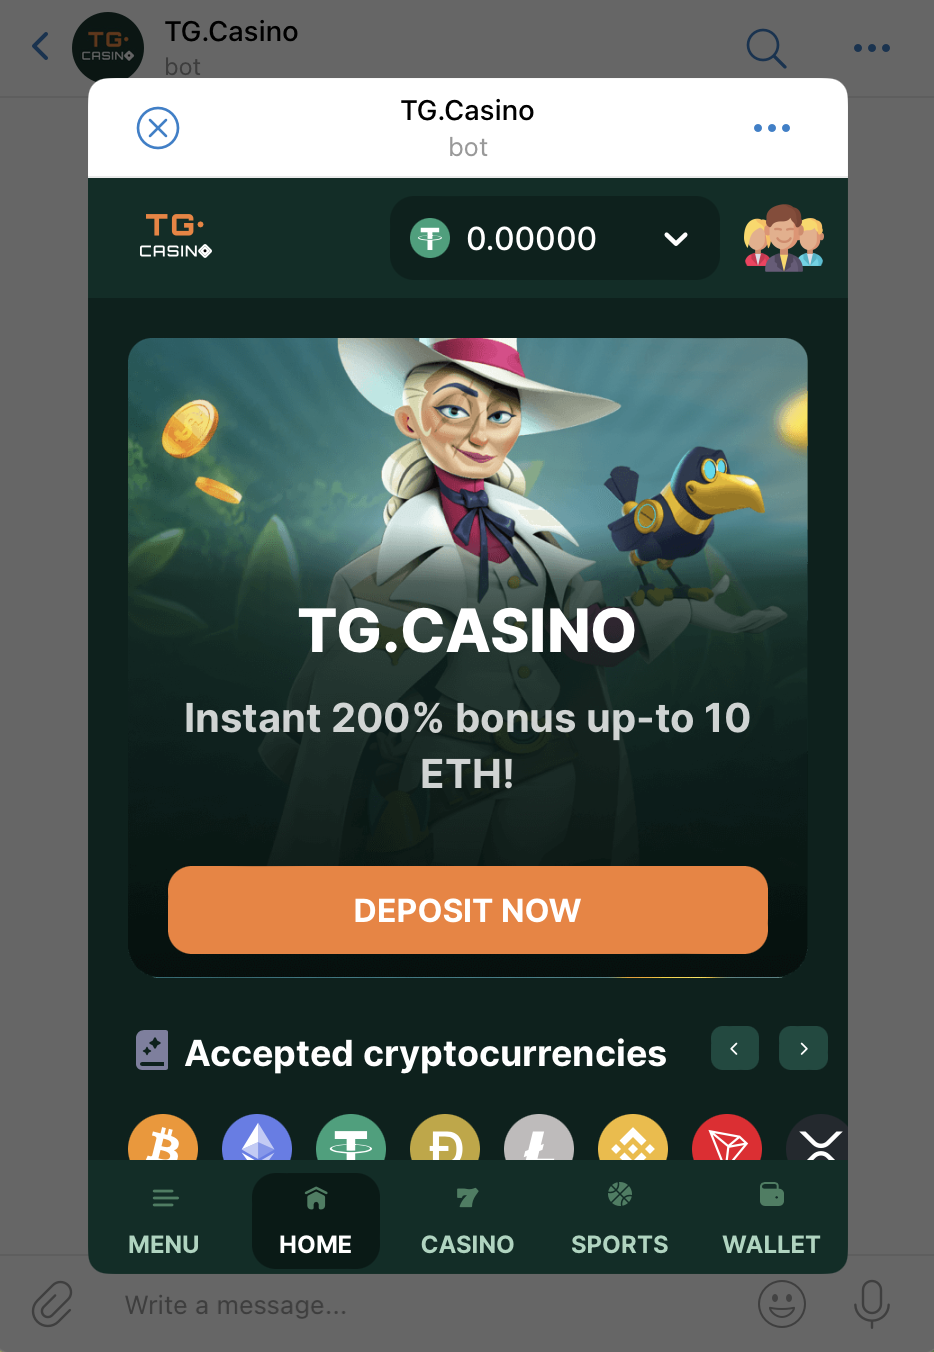 T.G Casino Telegram group